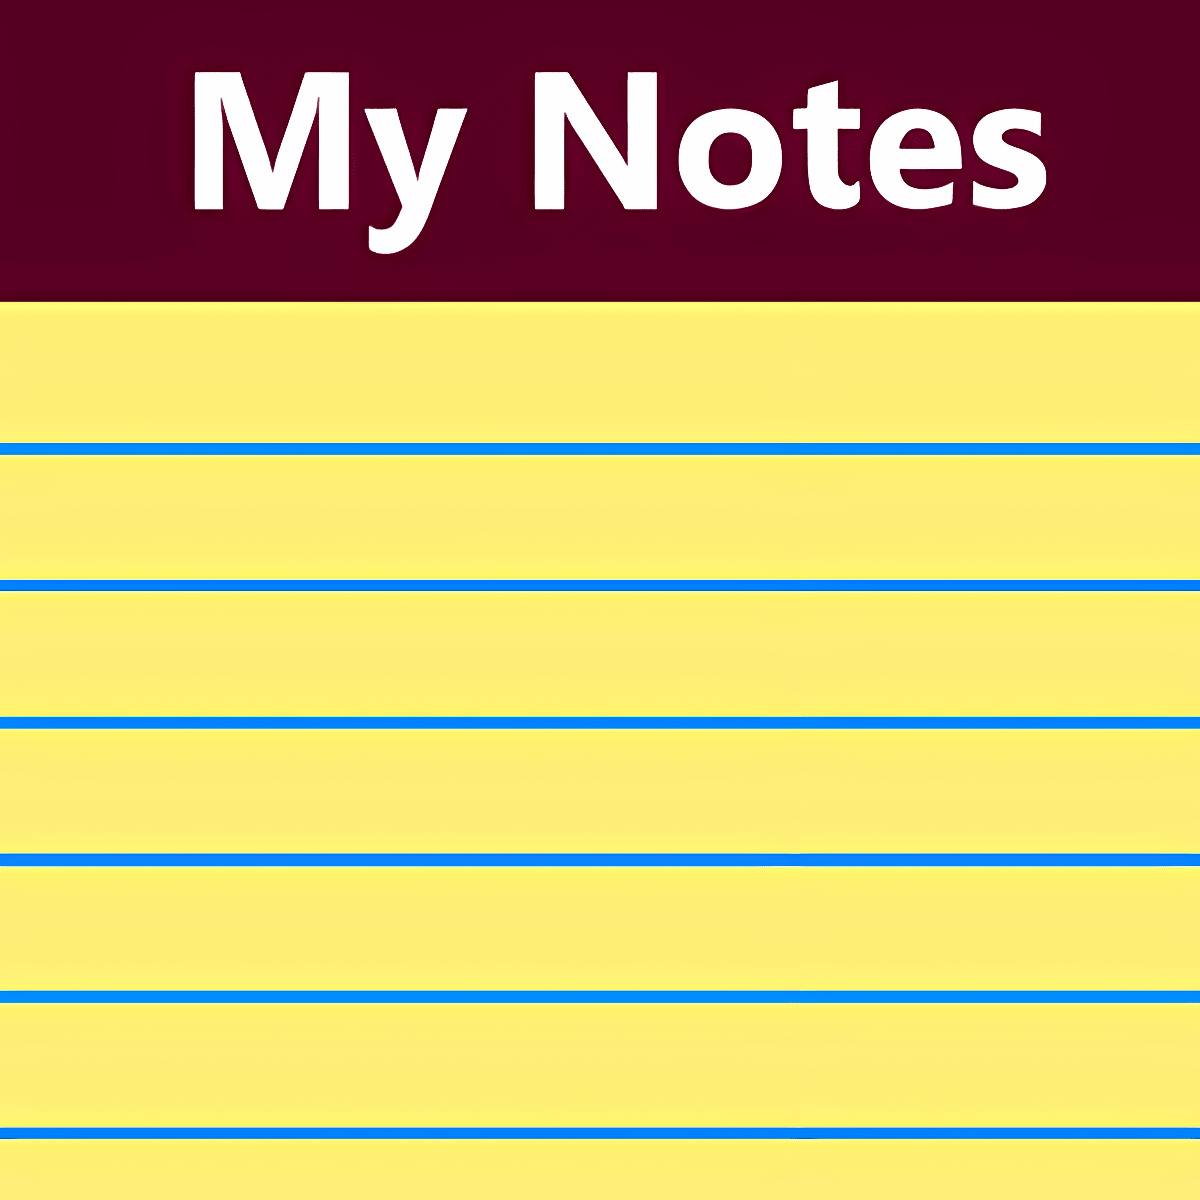 mynotes